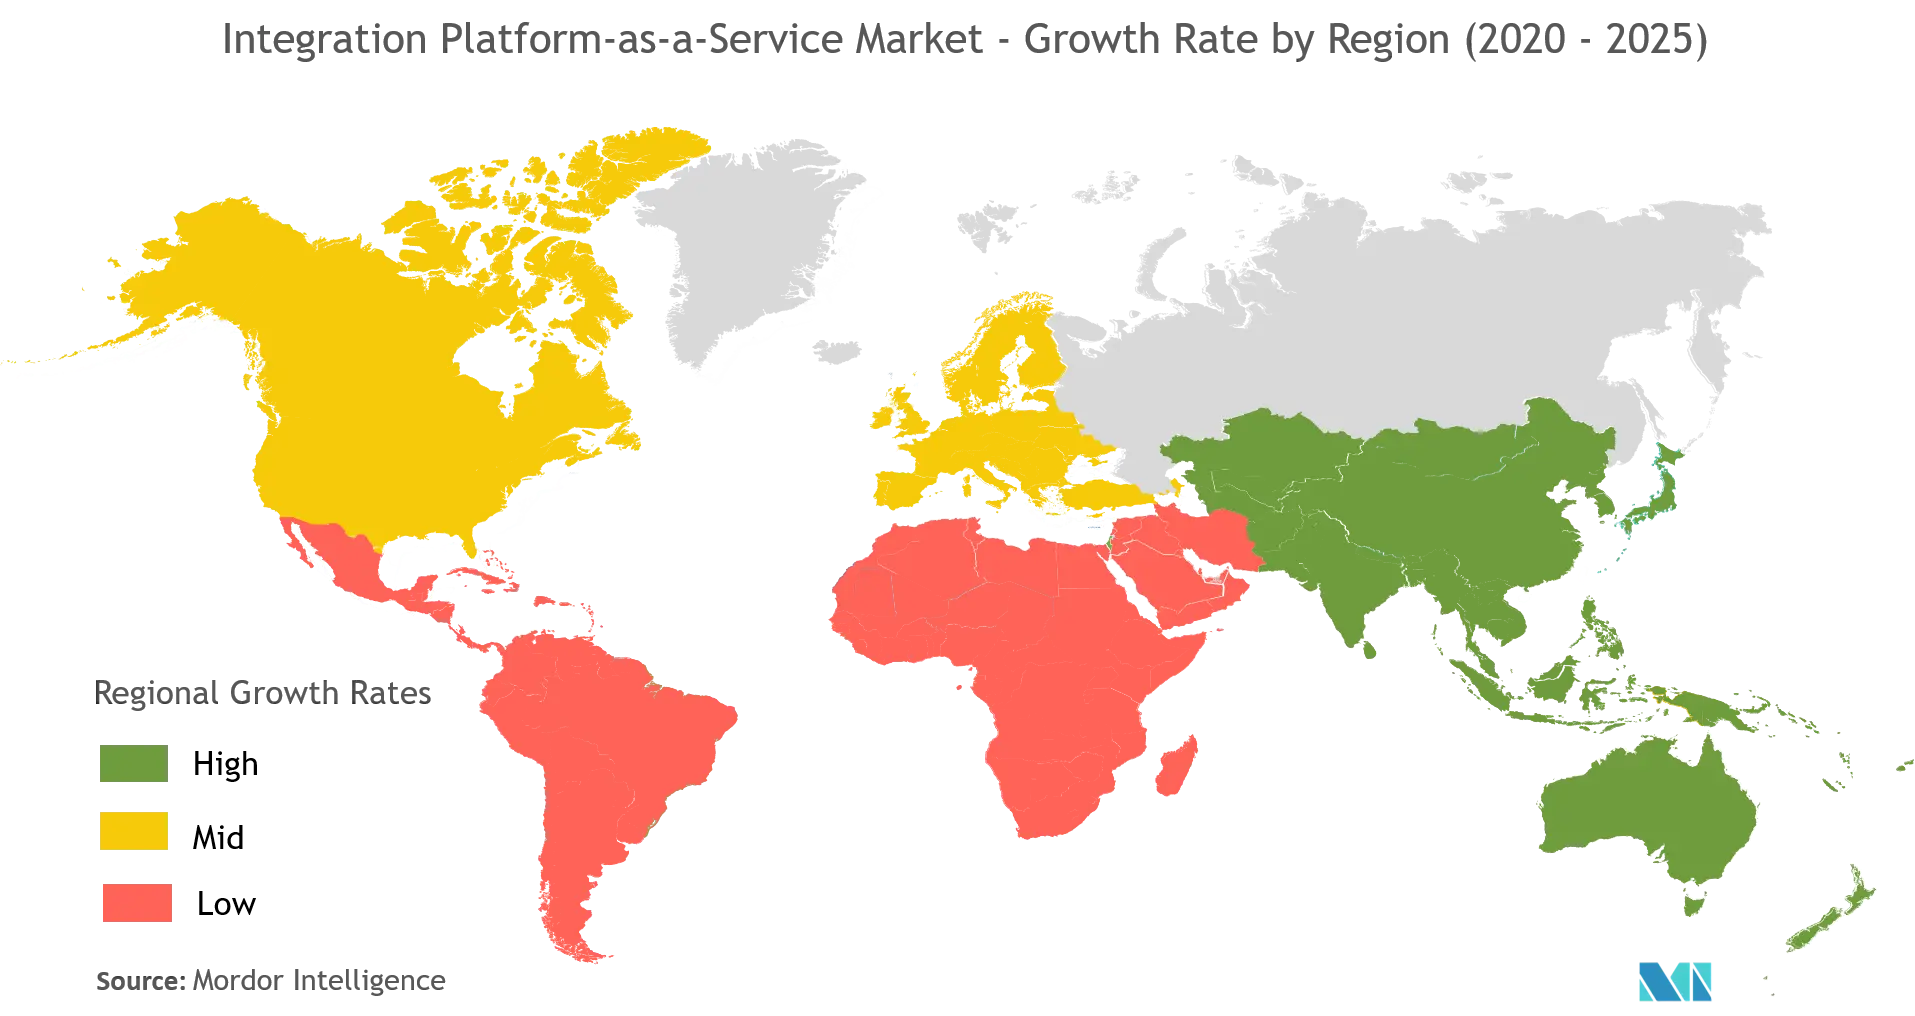 Integration Platform-as-a-Service Market Growth